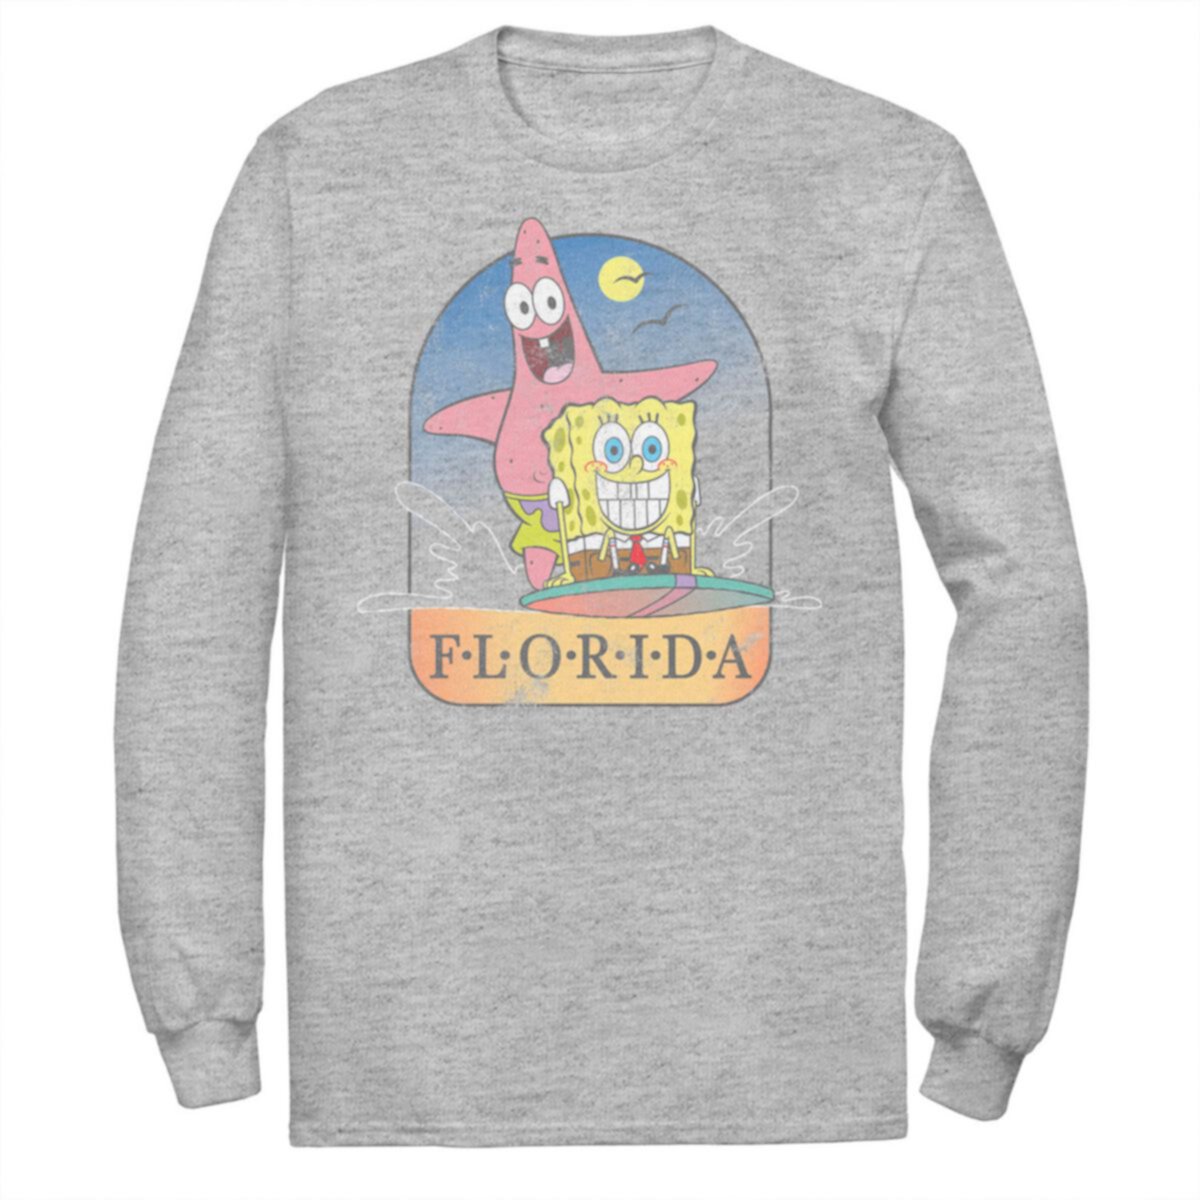 Мужская футболка с надписью SpongeBob SquarePants с надписью Patrick Florida Surf от Nickelodeon Nickelodeon